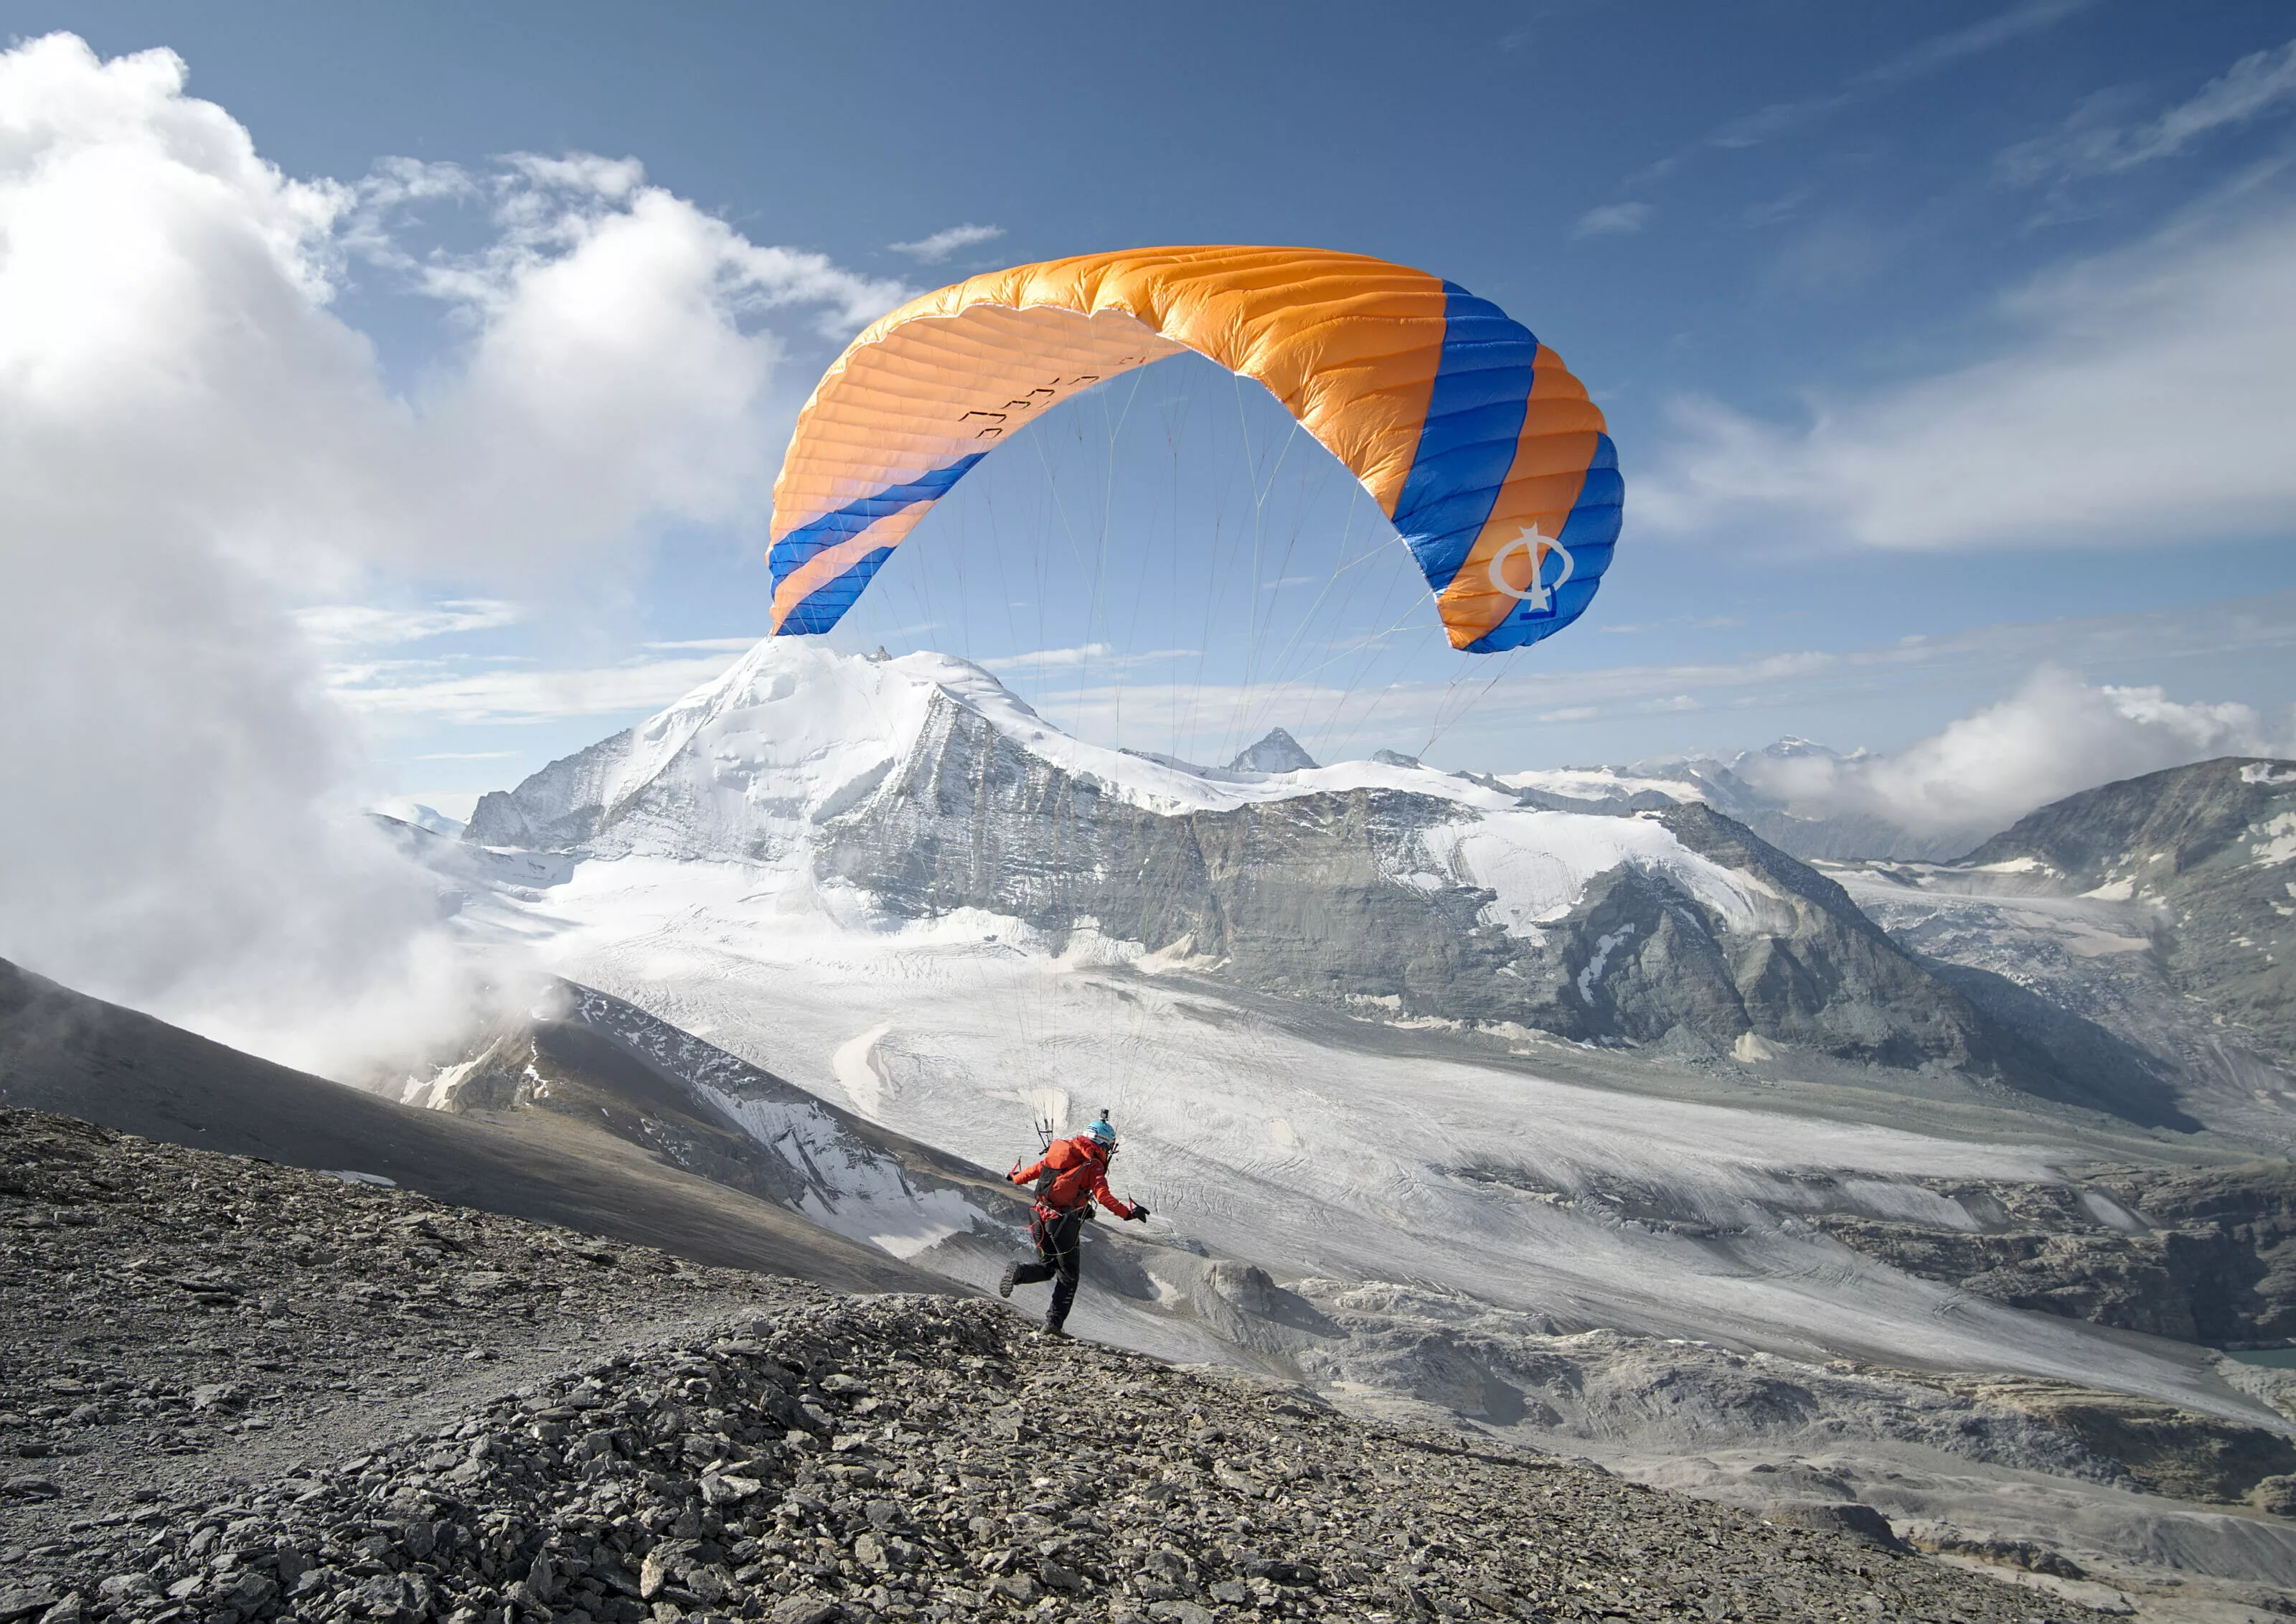 Fly Zermatt Paragliding in Switzerland, Europe | Paragliding - Rated 1.1